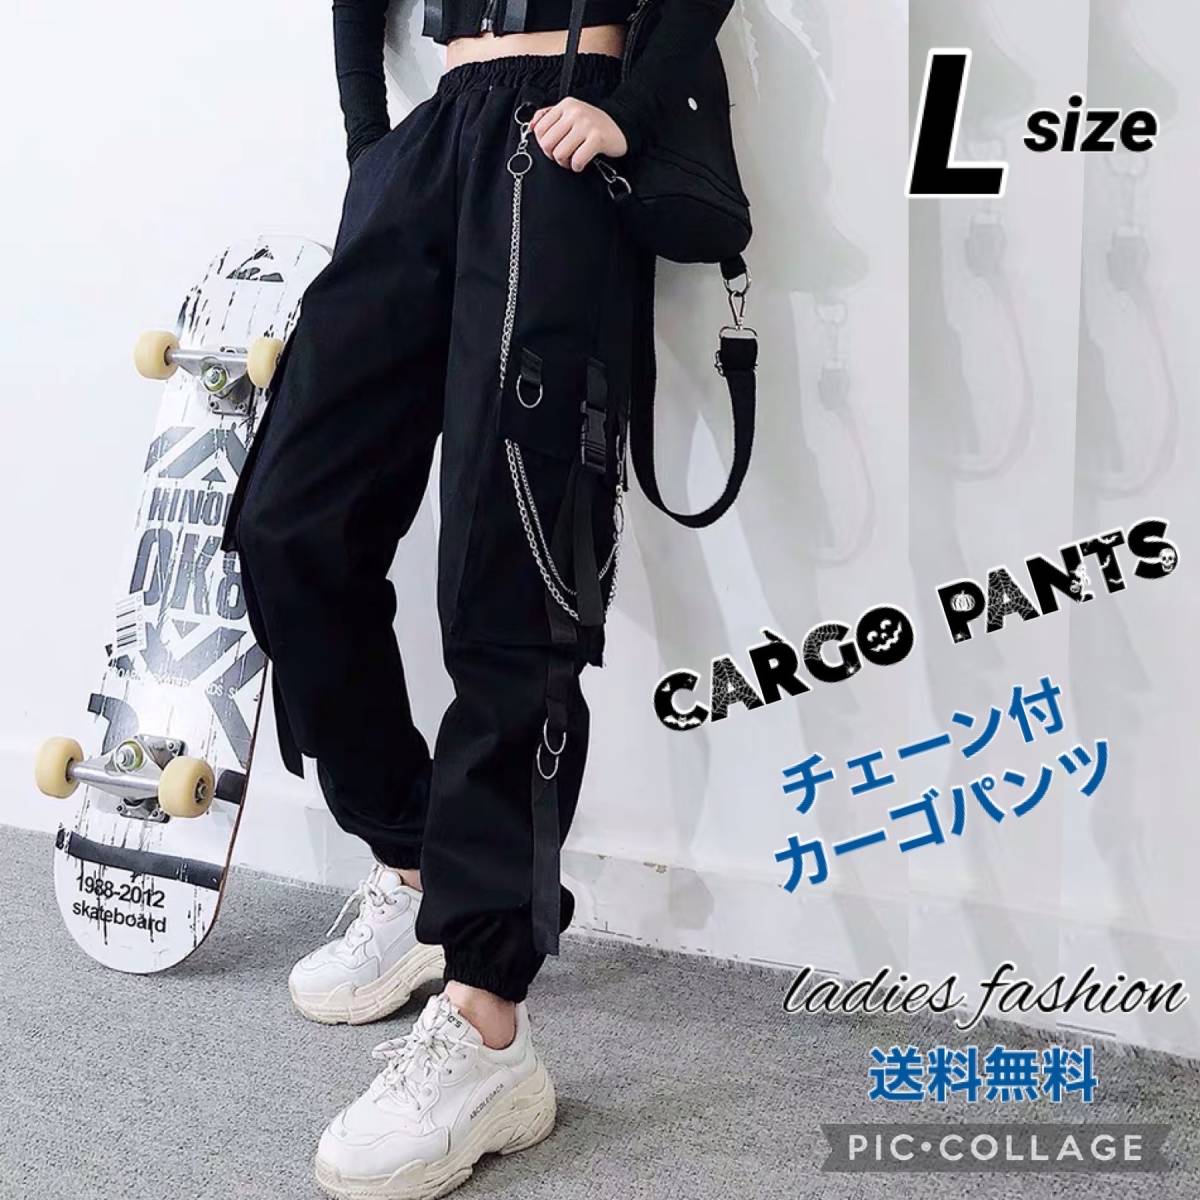 # black cargo pants chain attaching [ L size ] Korea fashion Street 